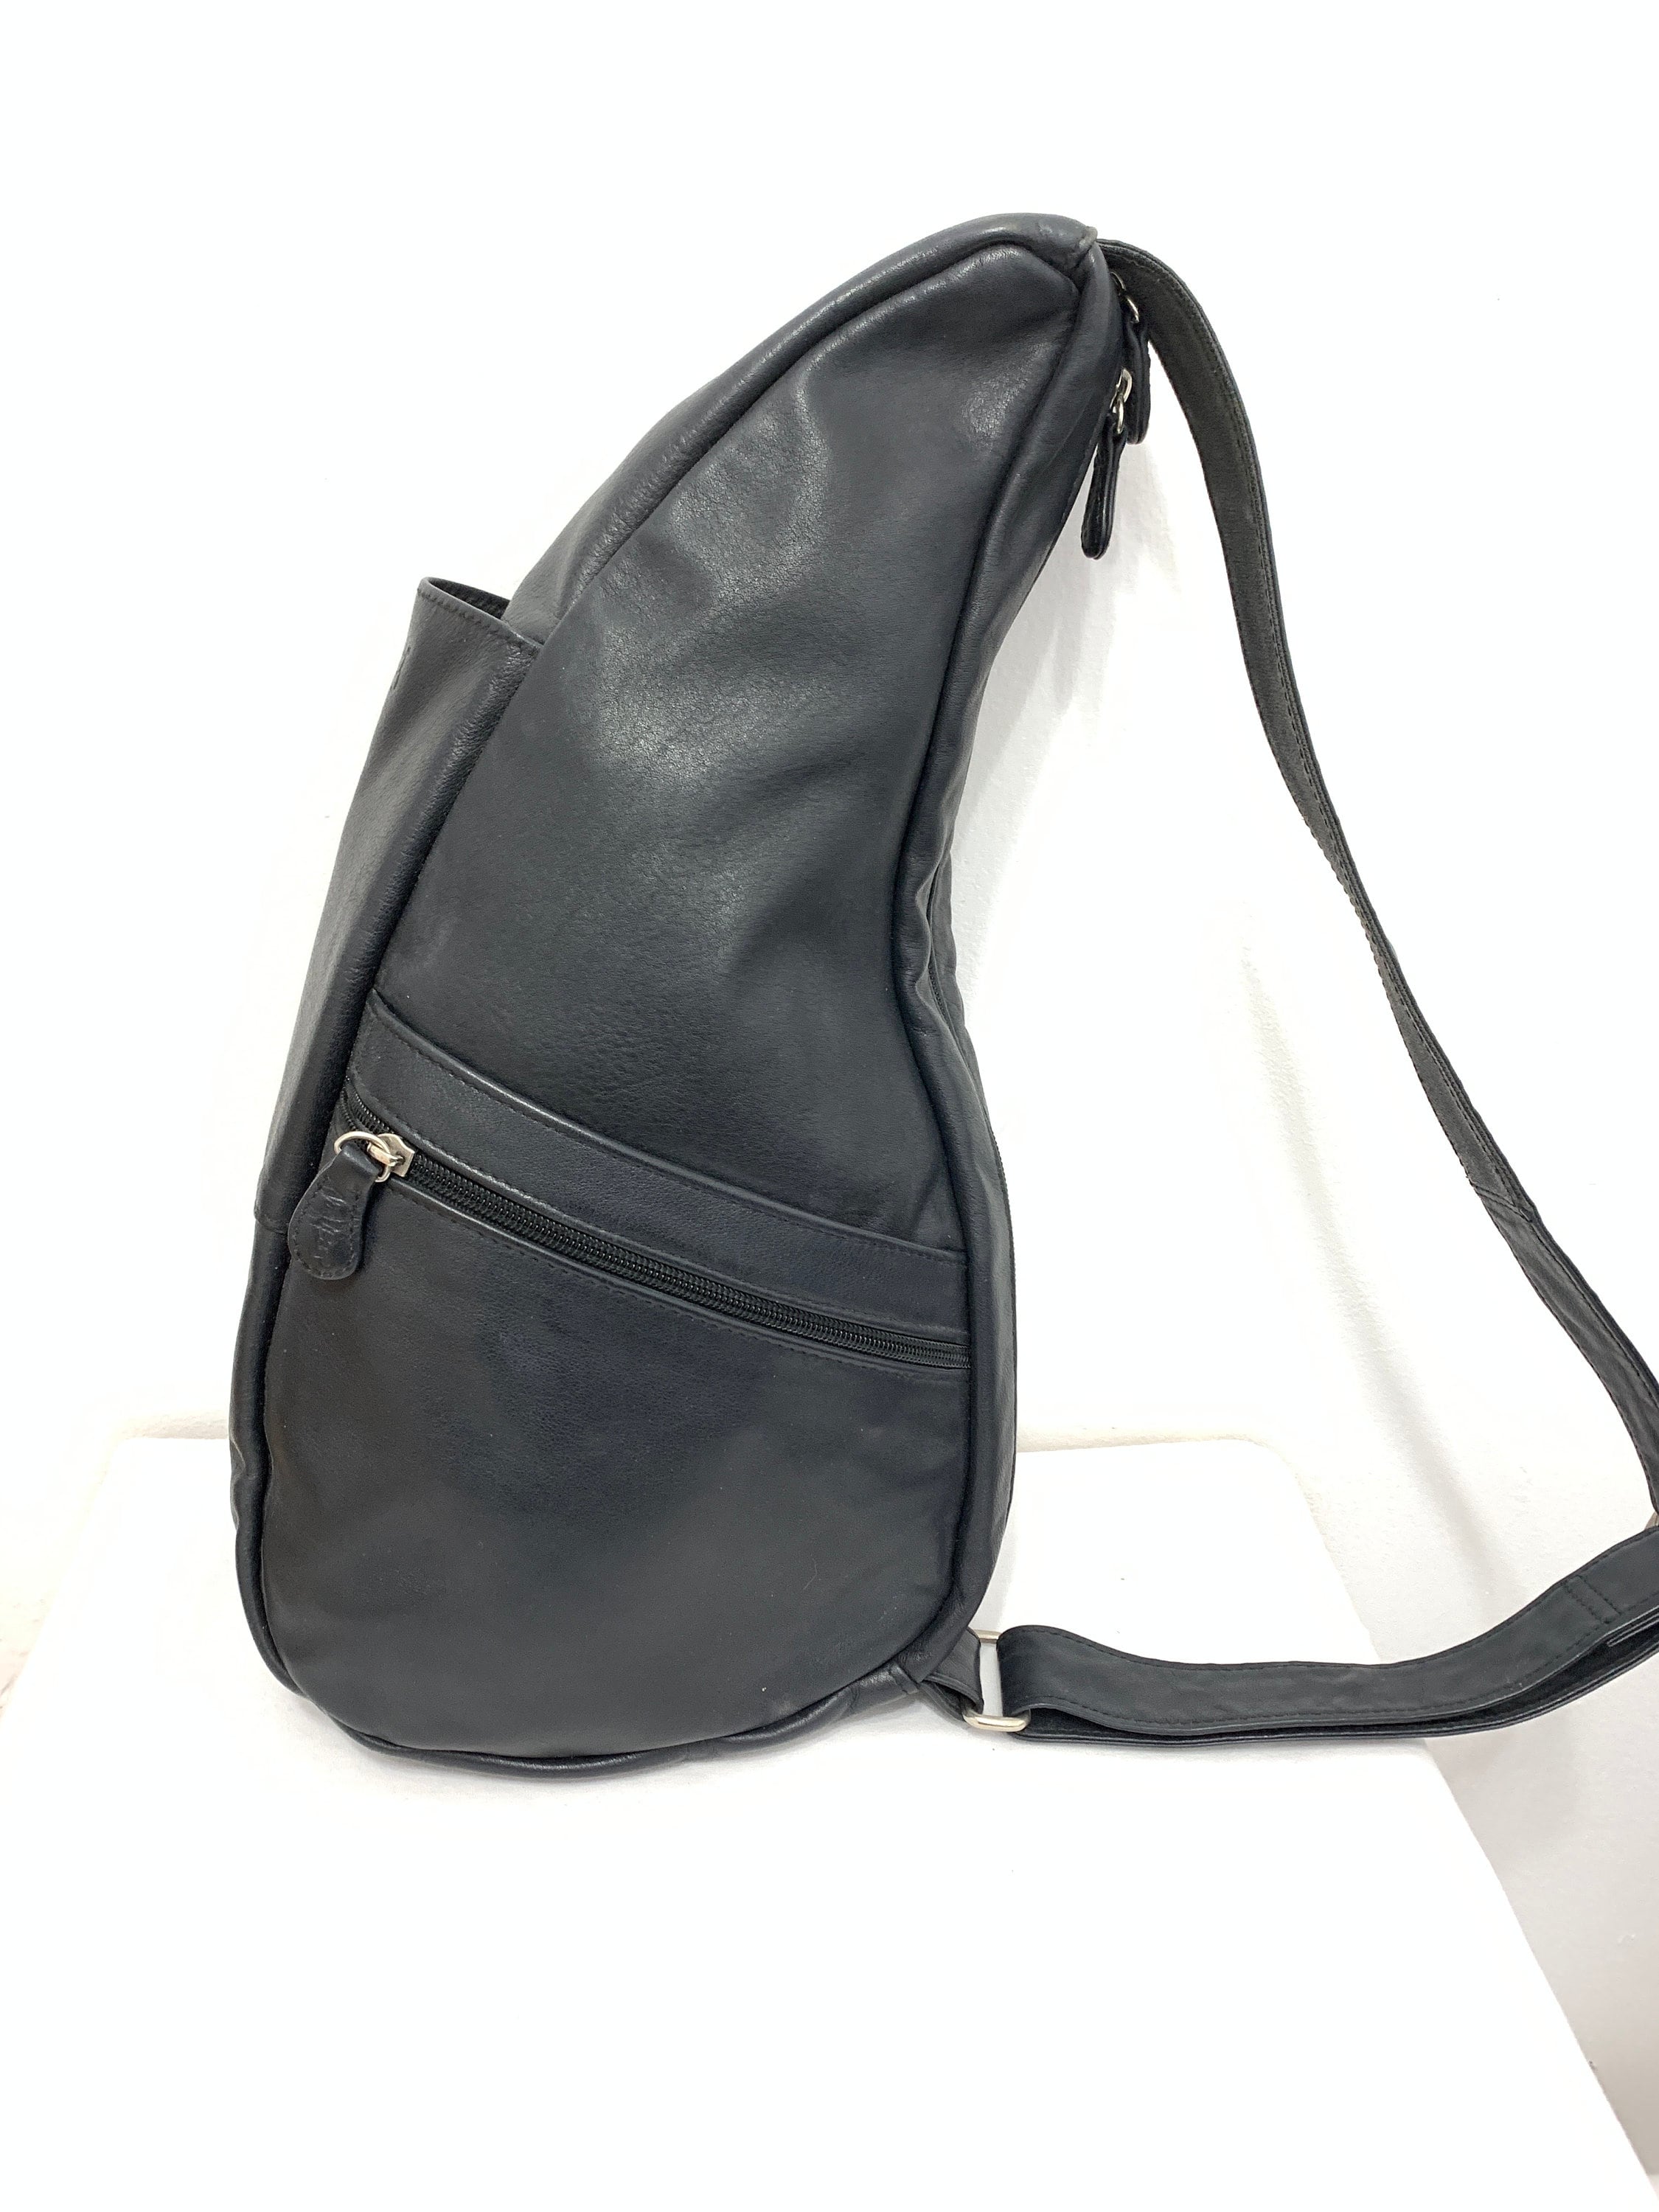 Shamguru Sling Bag, Crossbody Backpack with Hidden Pockets